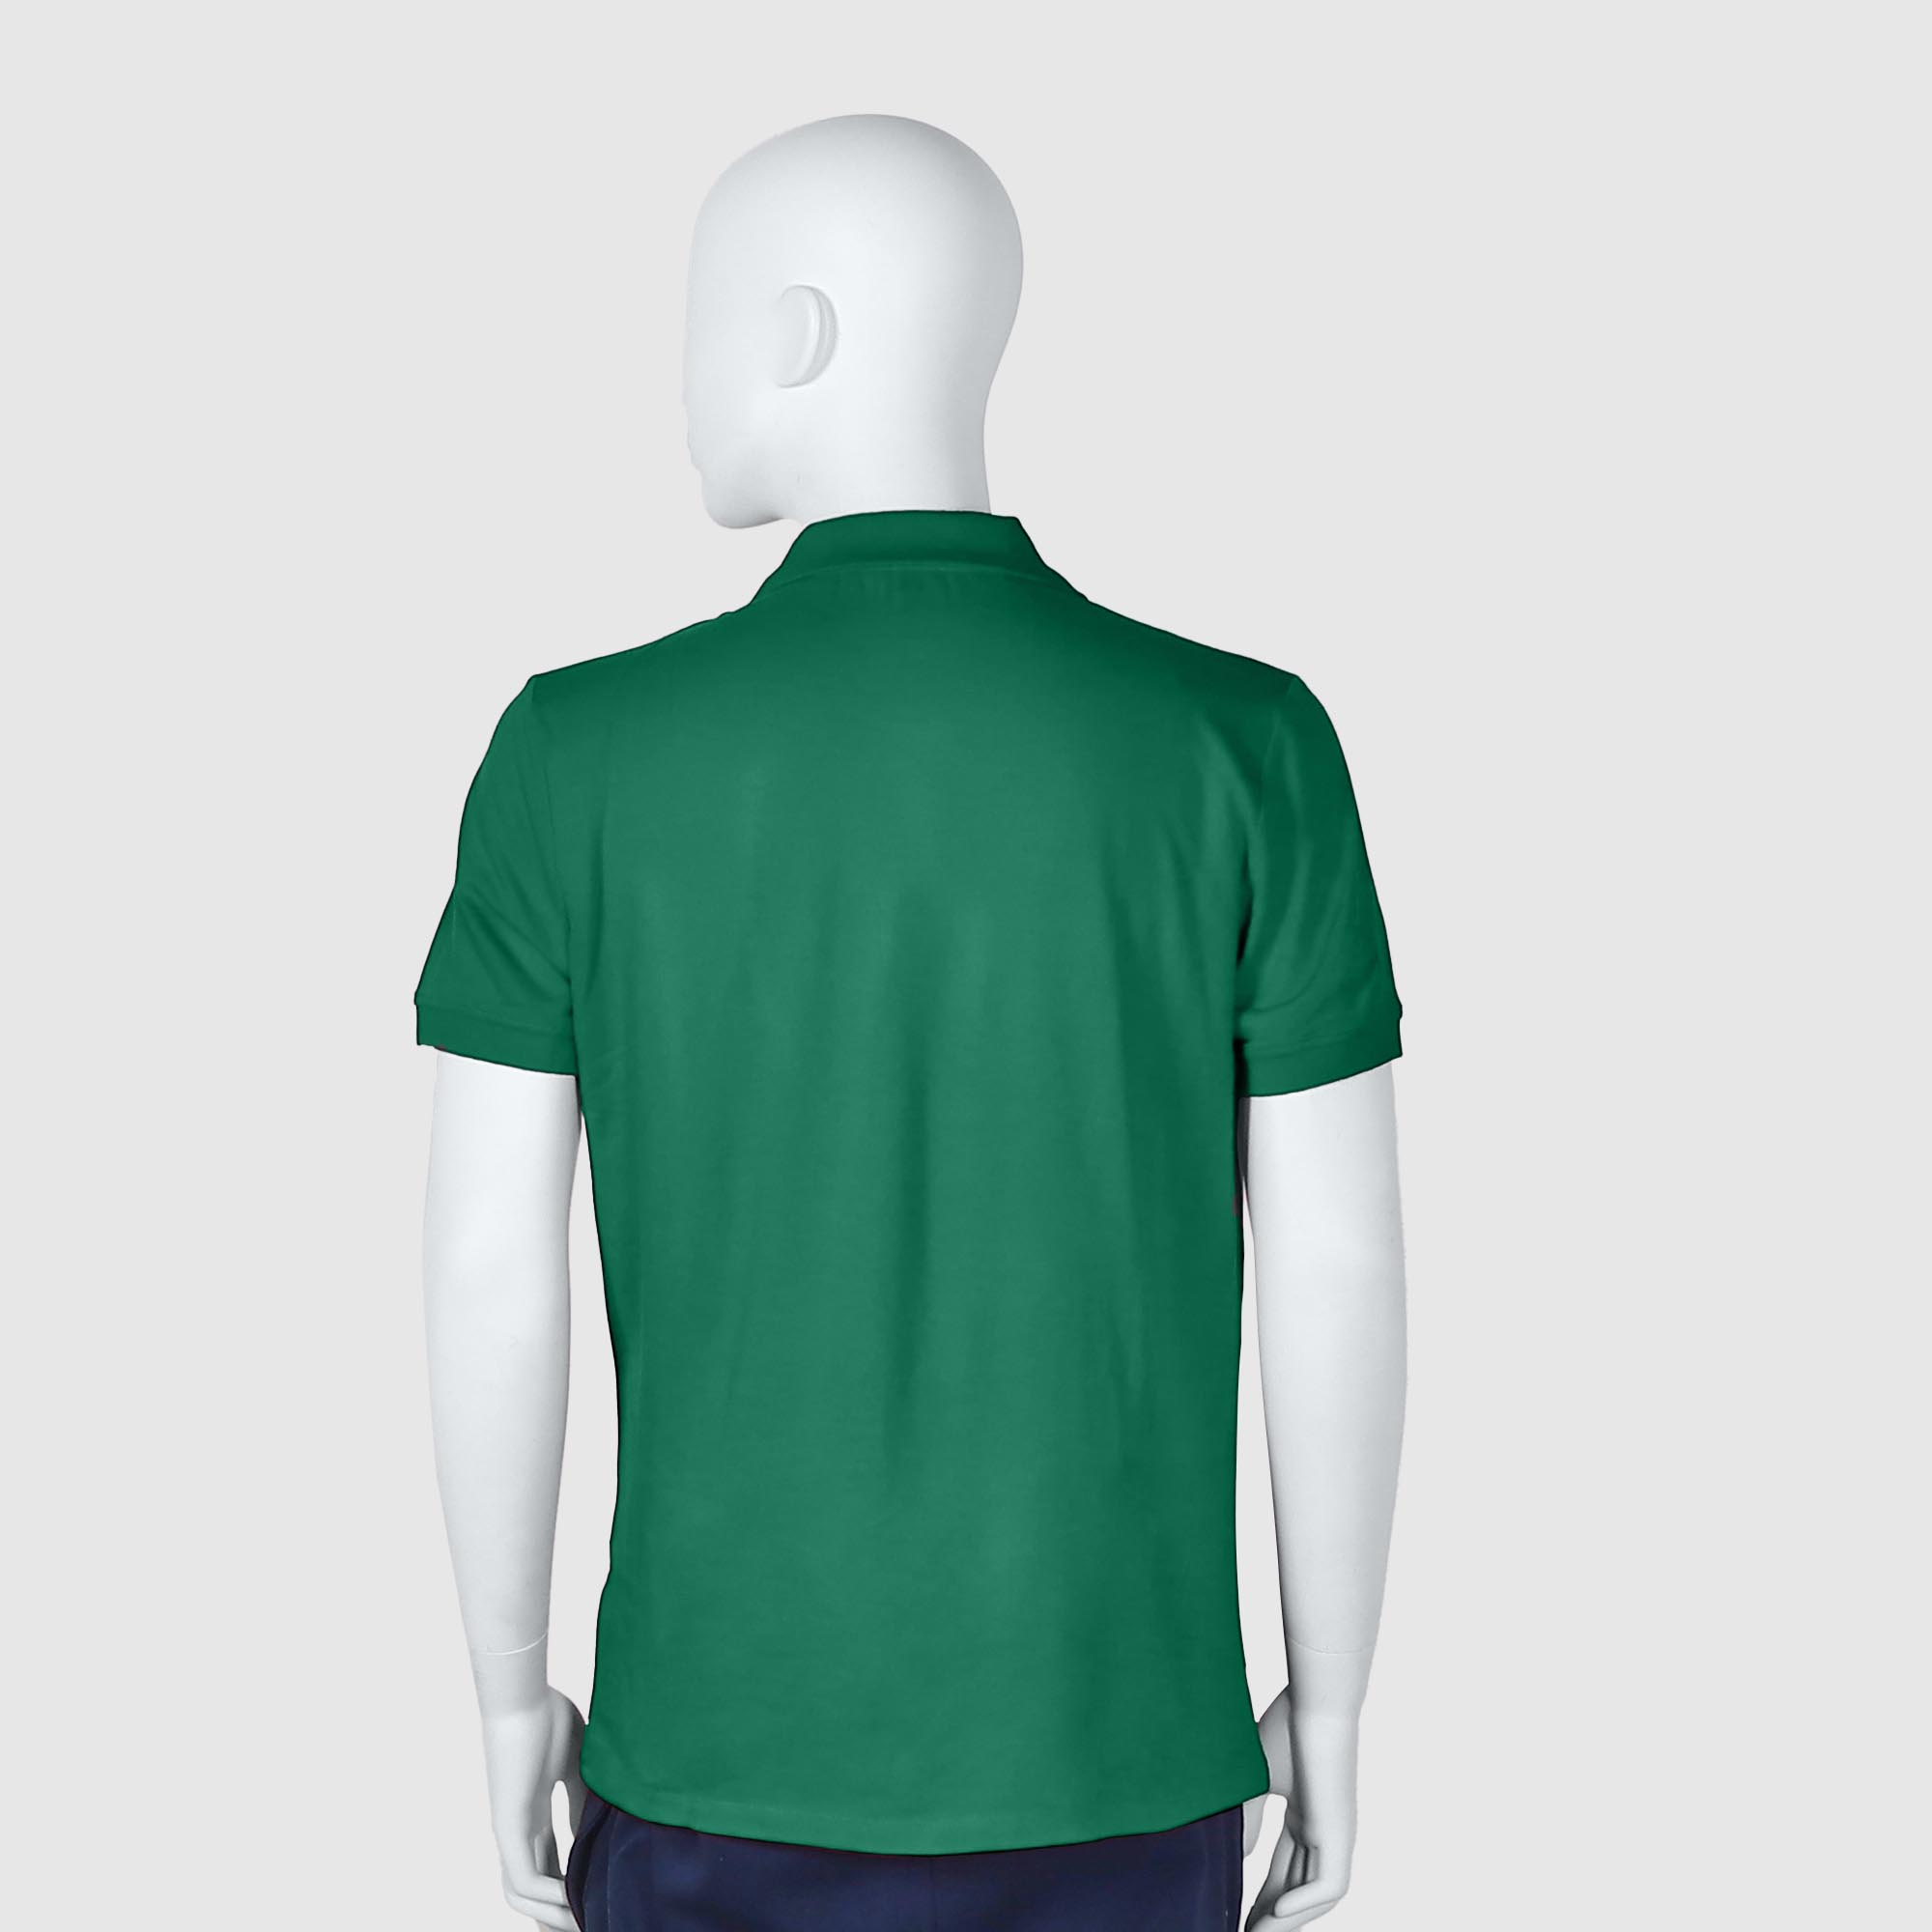 Мужская футболка-поло Diva Teks зелёная (DTD-09), цвет зелёный, размер 54-56 - фото 2